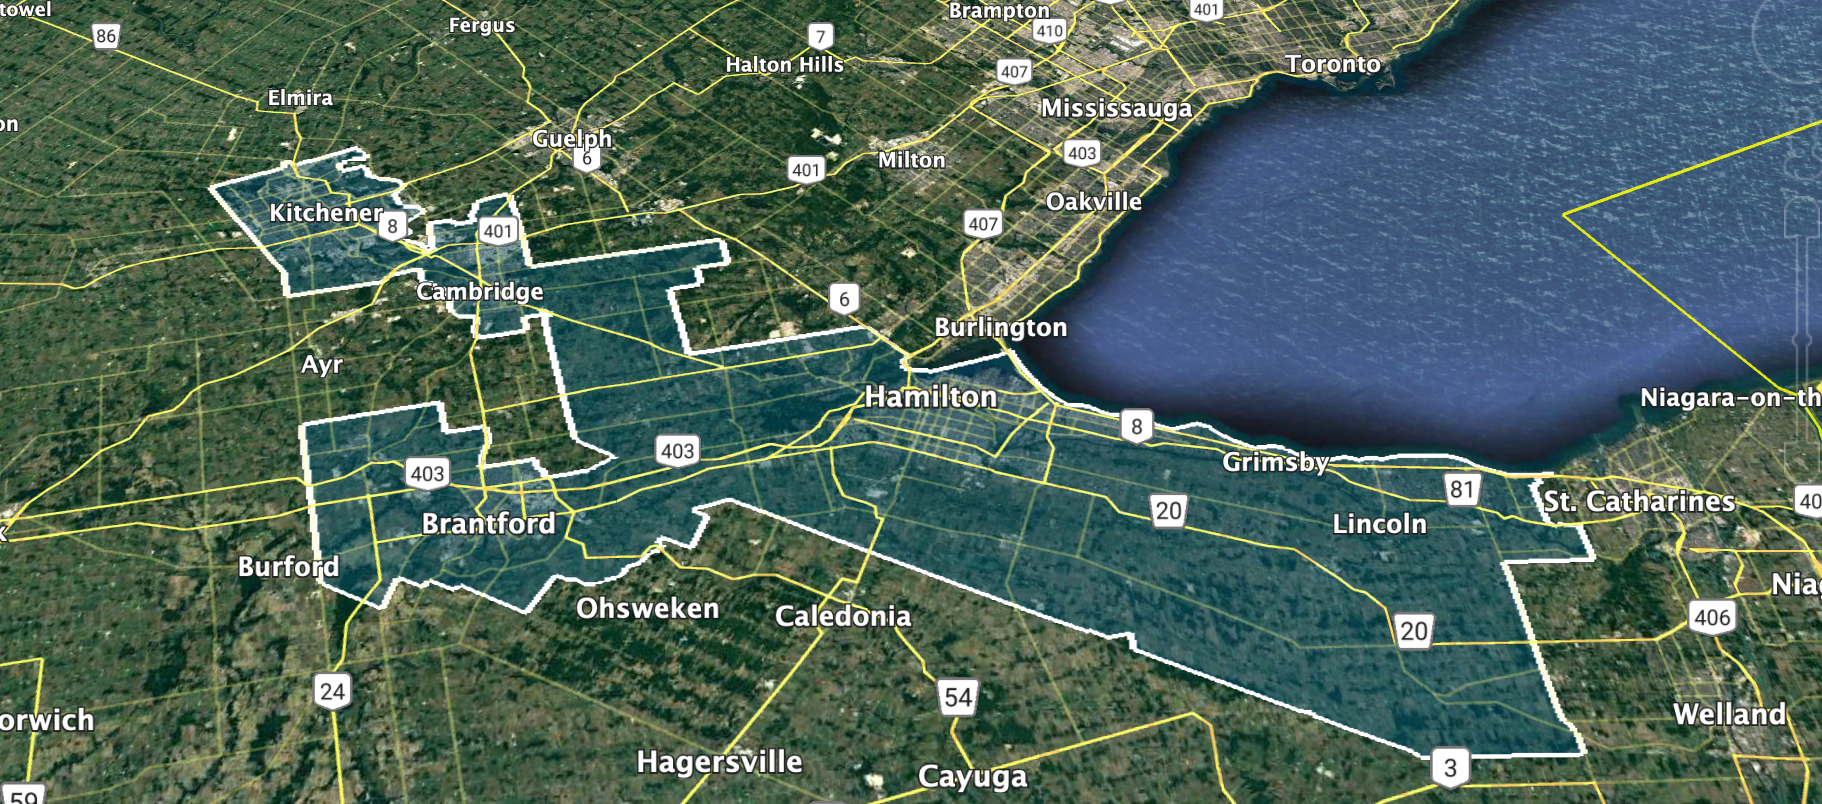 Hamilton Google Earth View